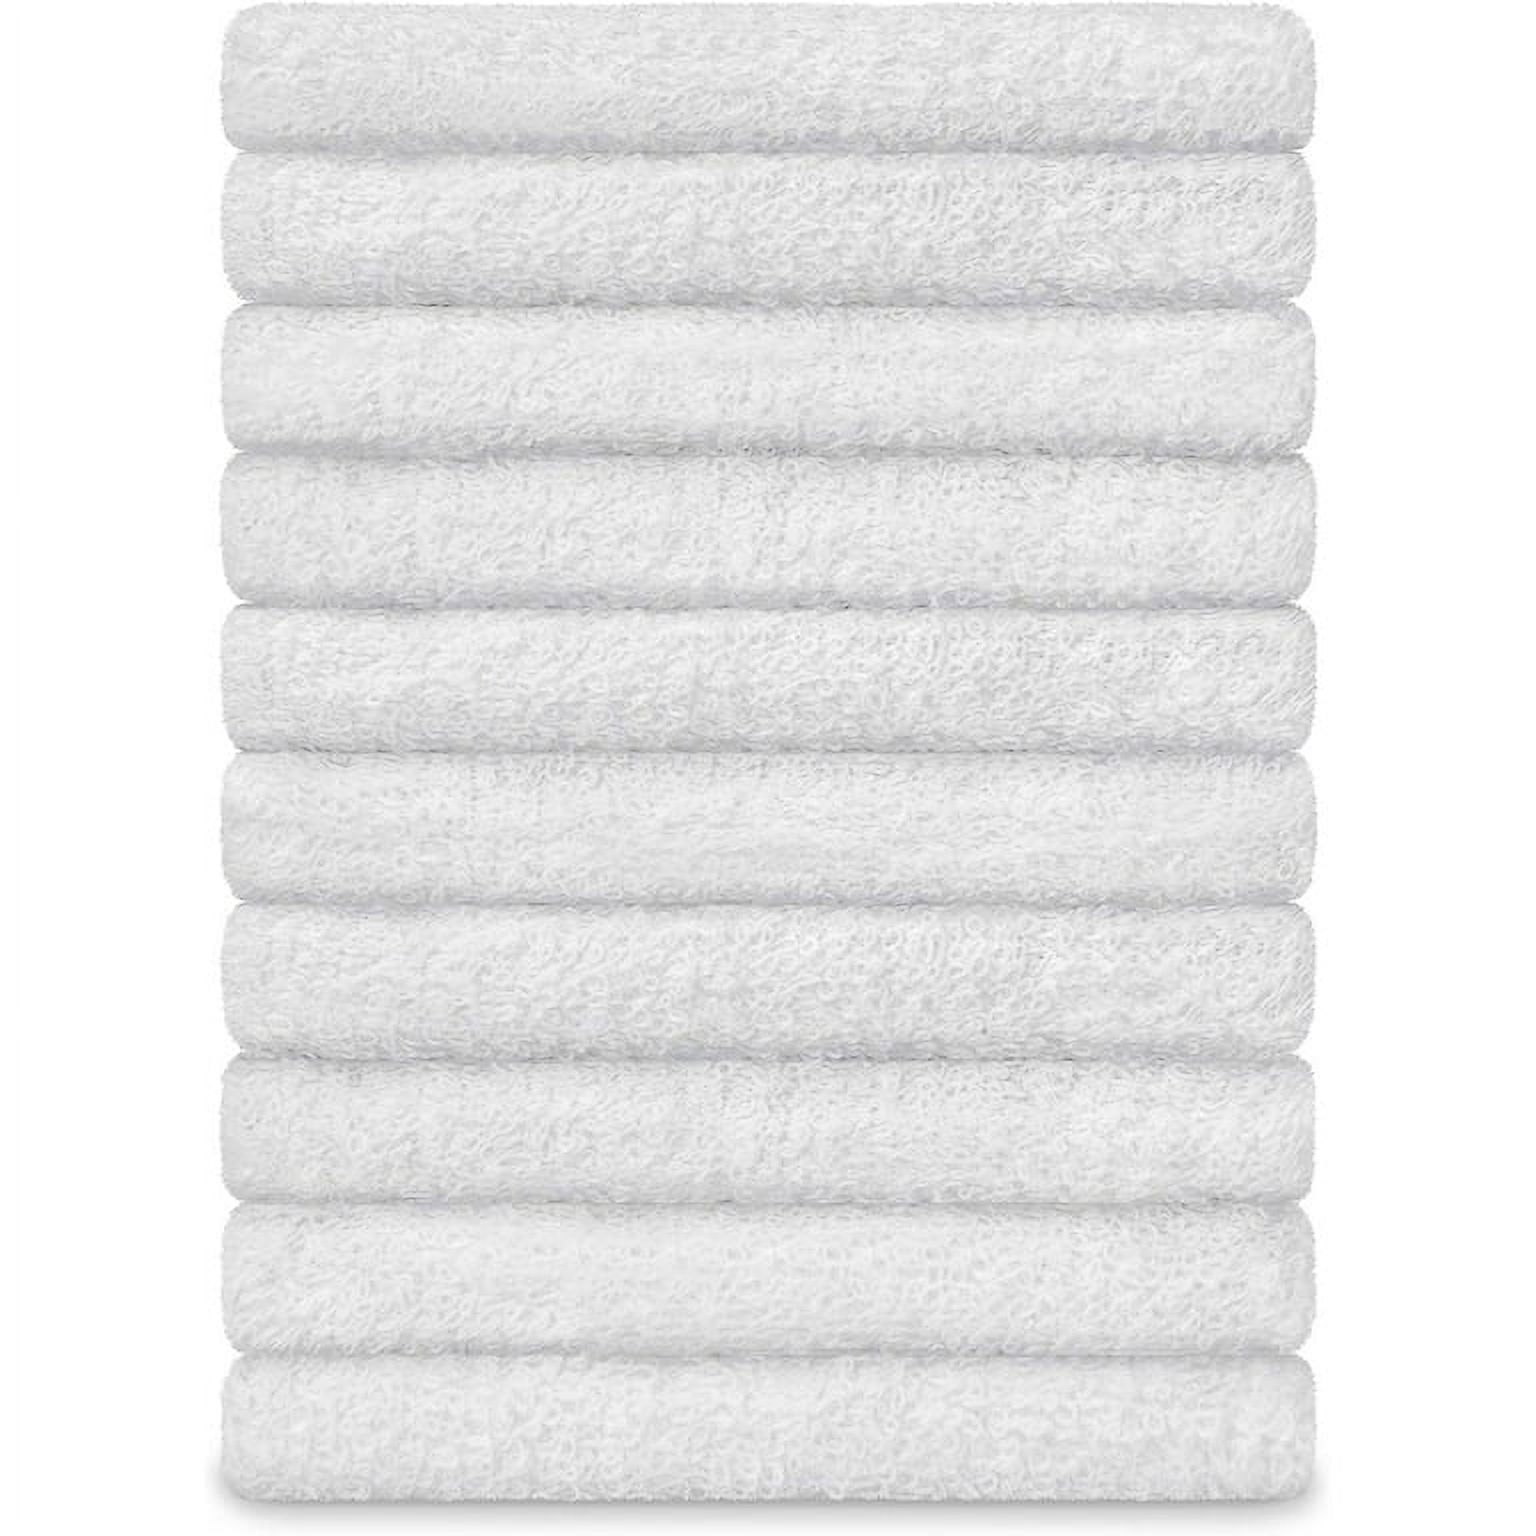 DecorRack 100% Cotton Wash Cloths, 12 x 12 inch Soft Towels, White (10 Pack)